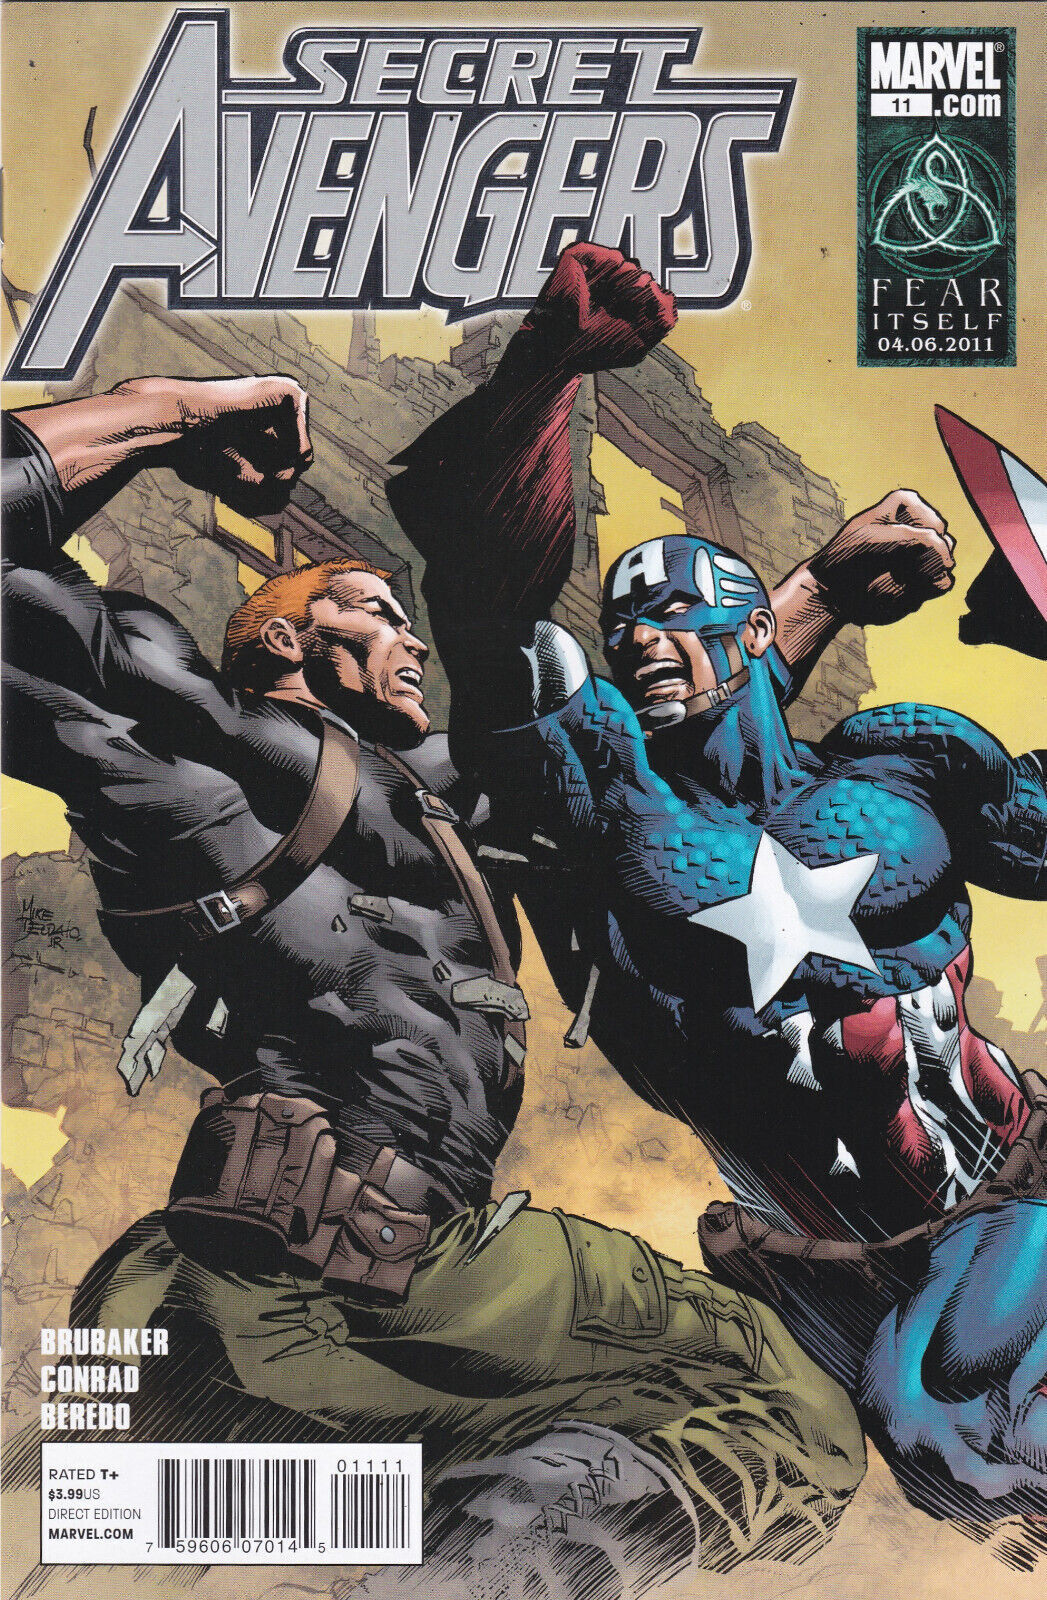 Secret Avengers #11 Vol. 1 (Marvel, 2011) ungraded, High Grade